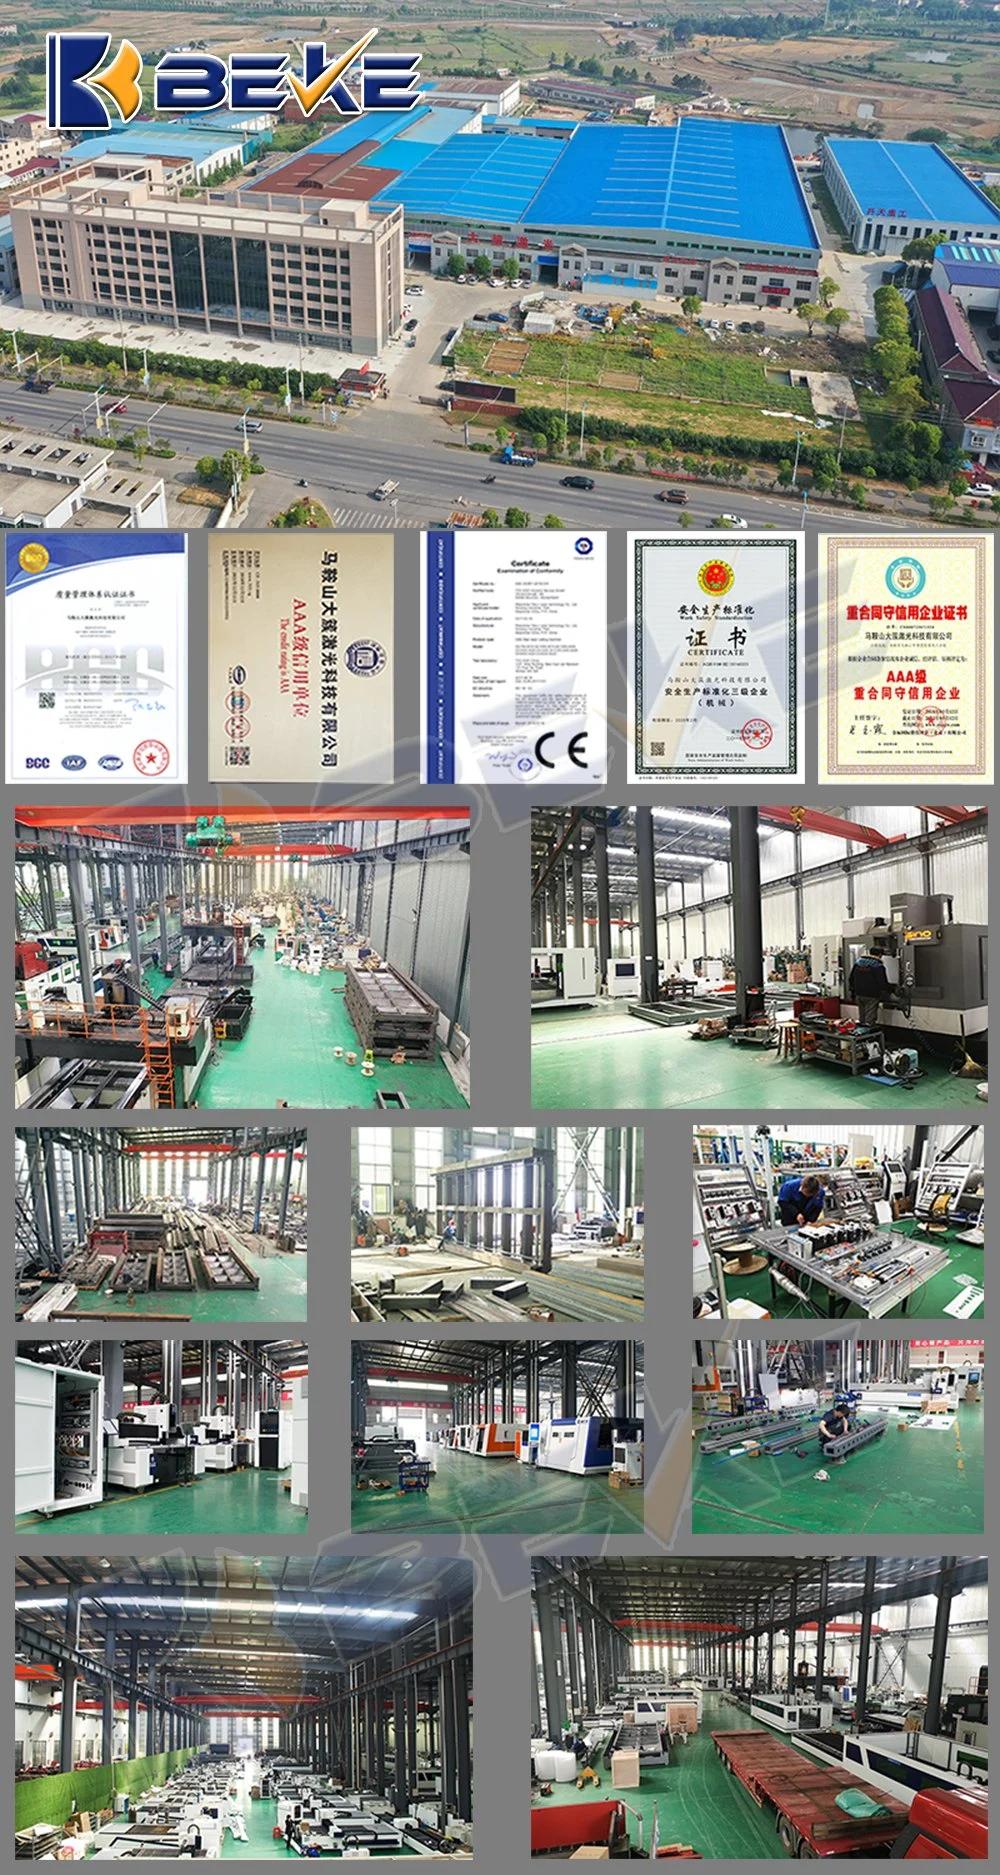 Nanjing Beke New Style 4015 Exchange Working Table Stainless Steel Sheet CNC Fiber Laser Cutting Machine